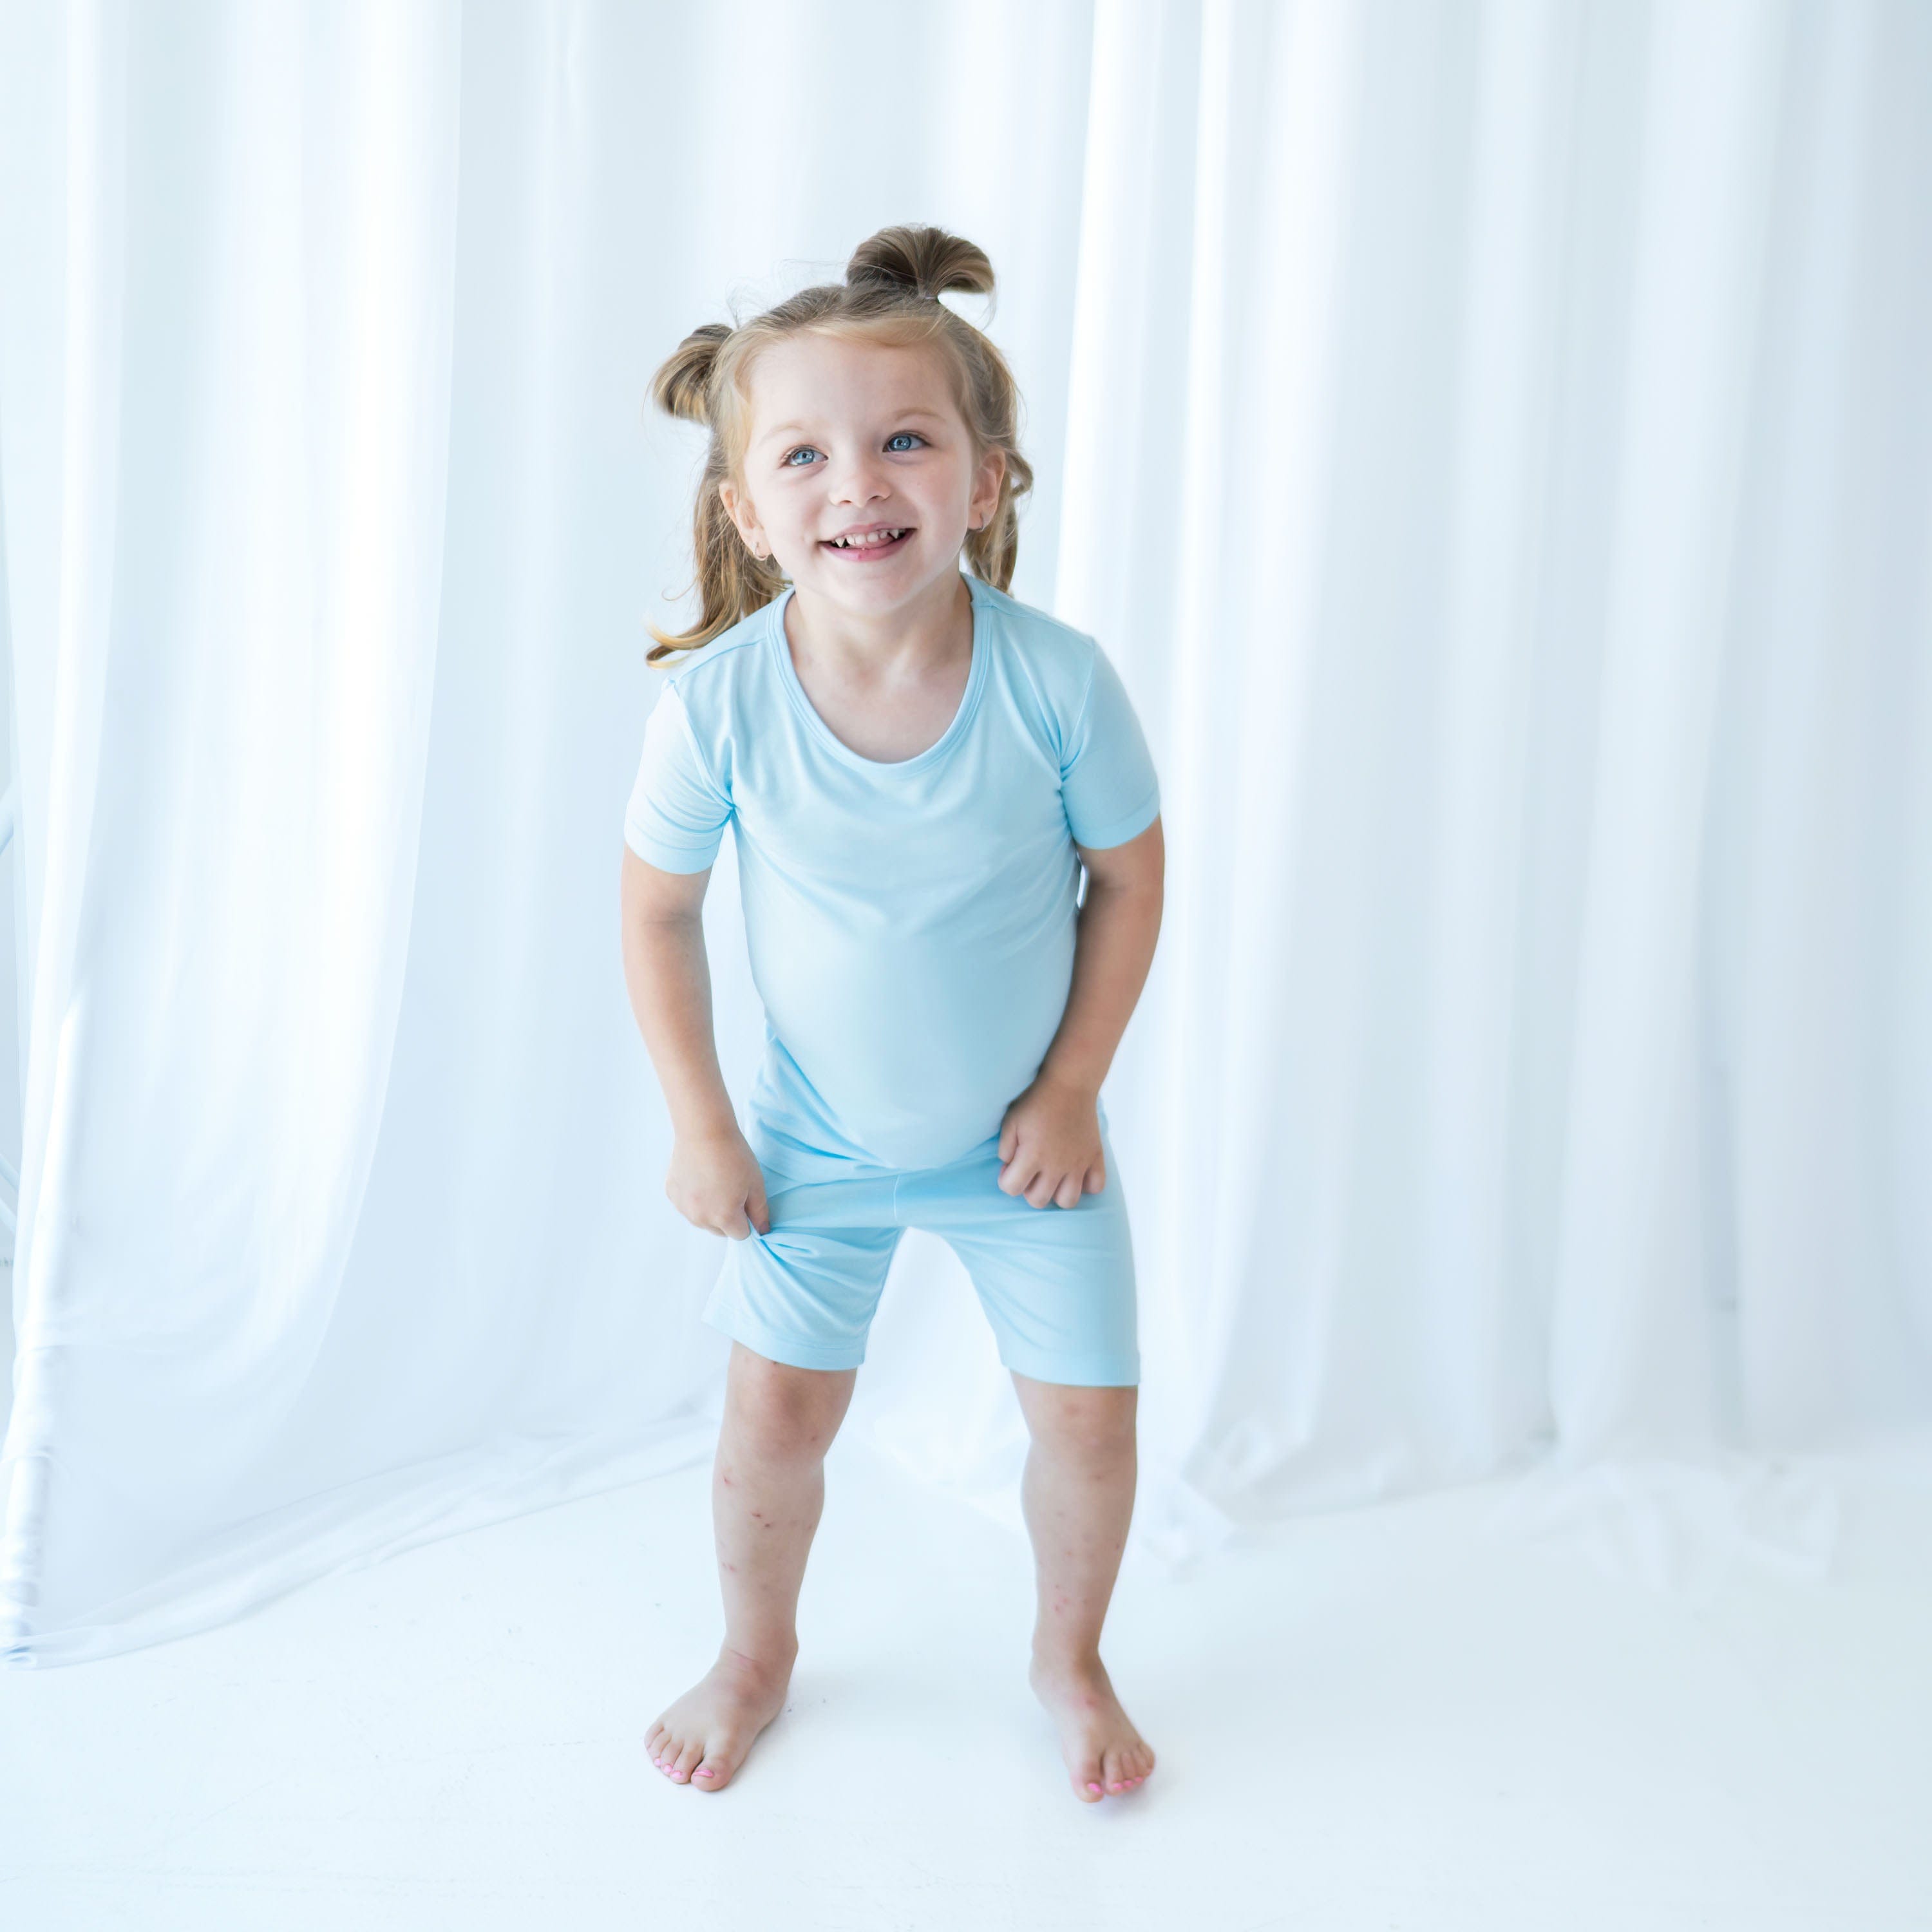 Kyte Baby Short Sleeve Toddler Pajama Set Short Sleeve Pajamas in Powder